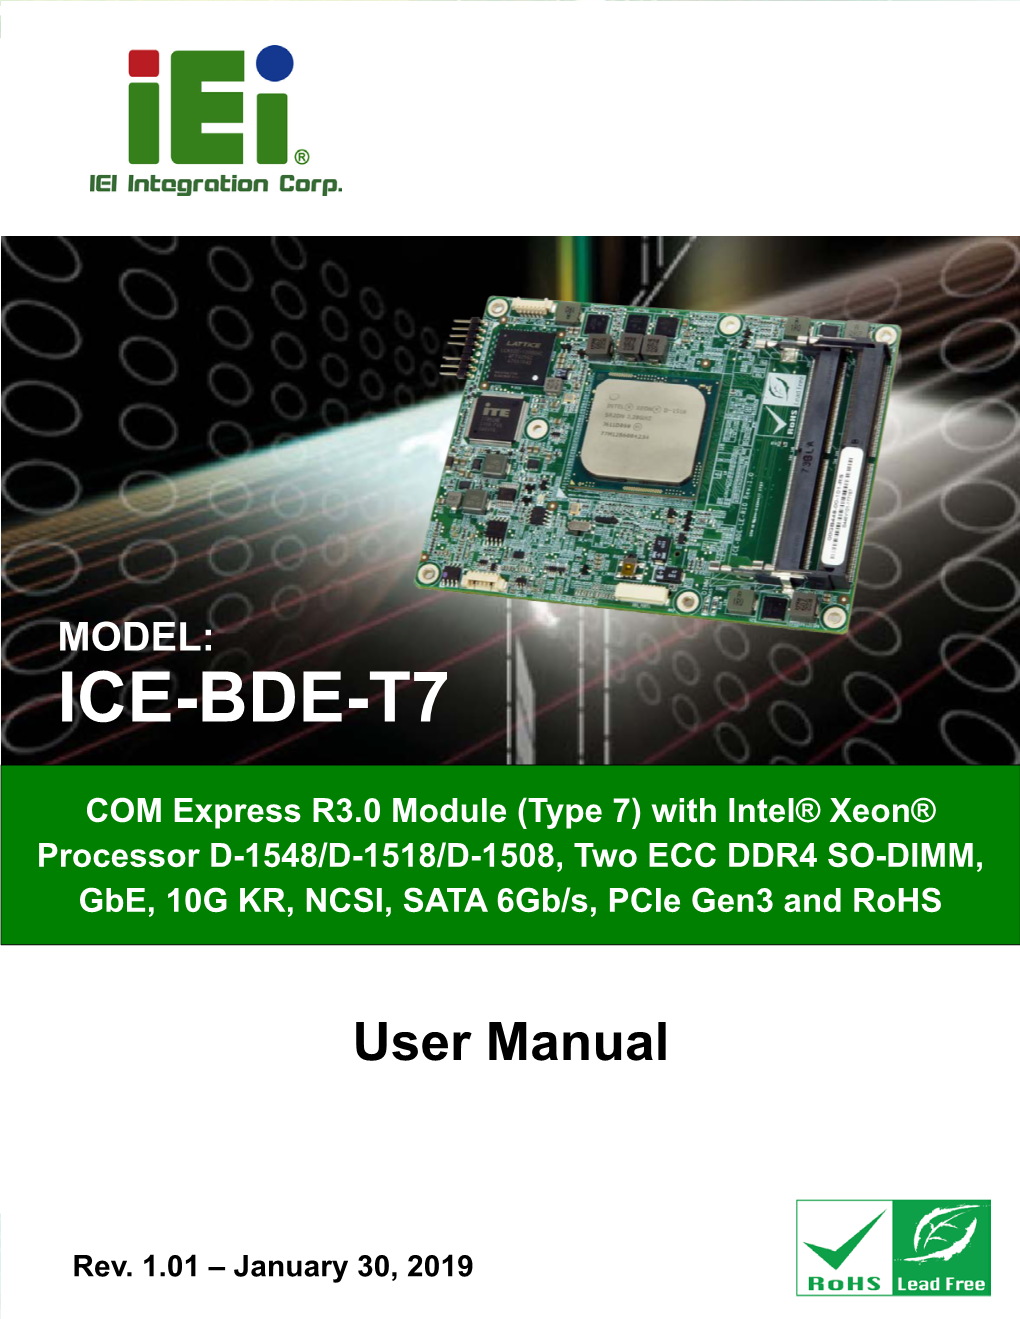 ICE-BDE-T7 COM Express Module